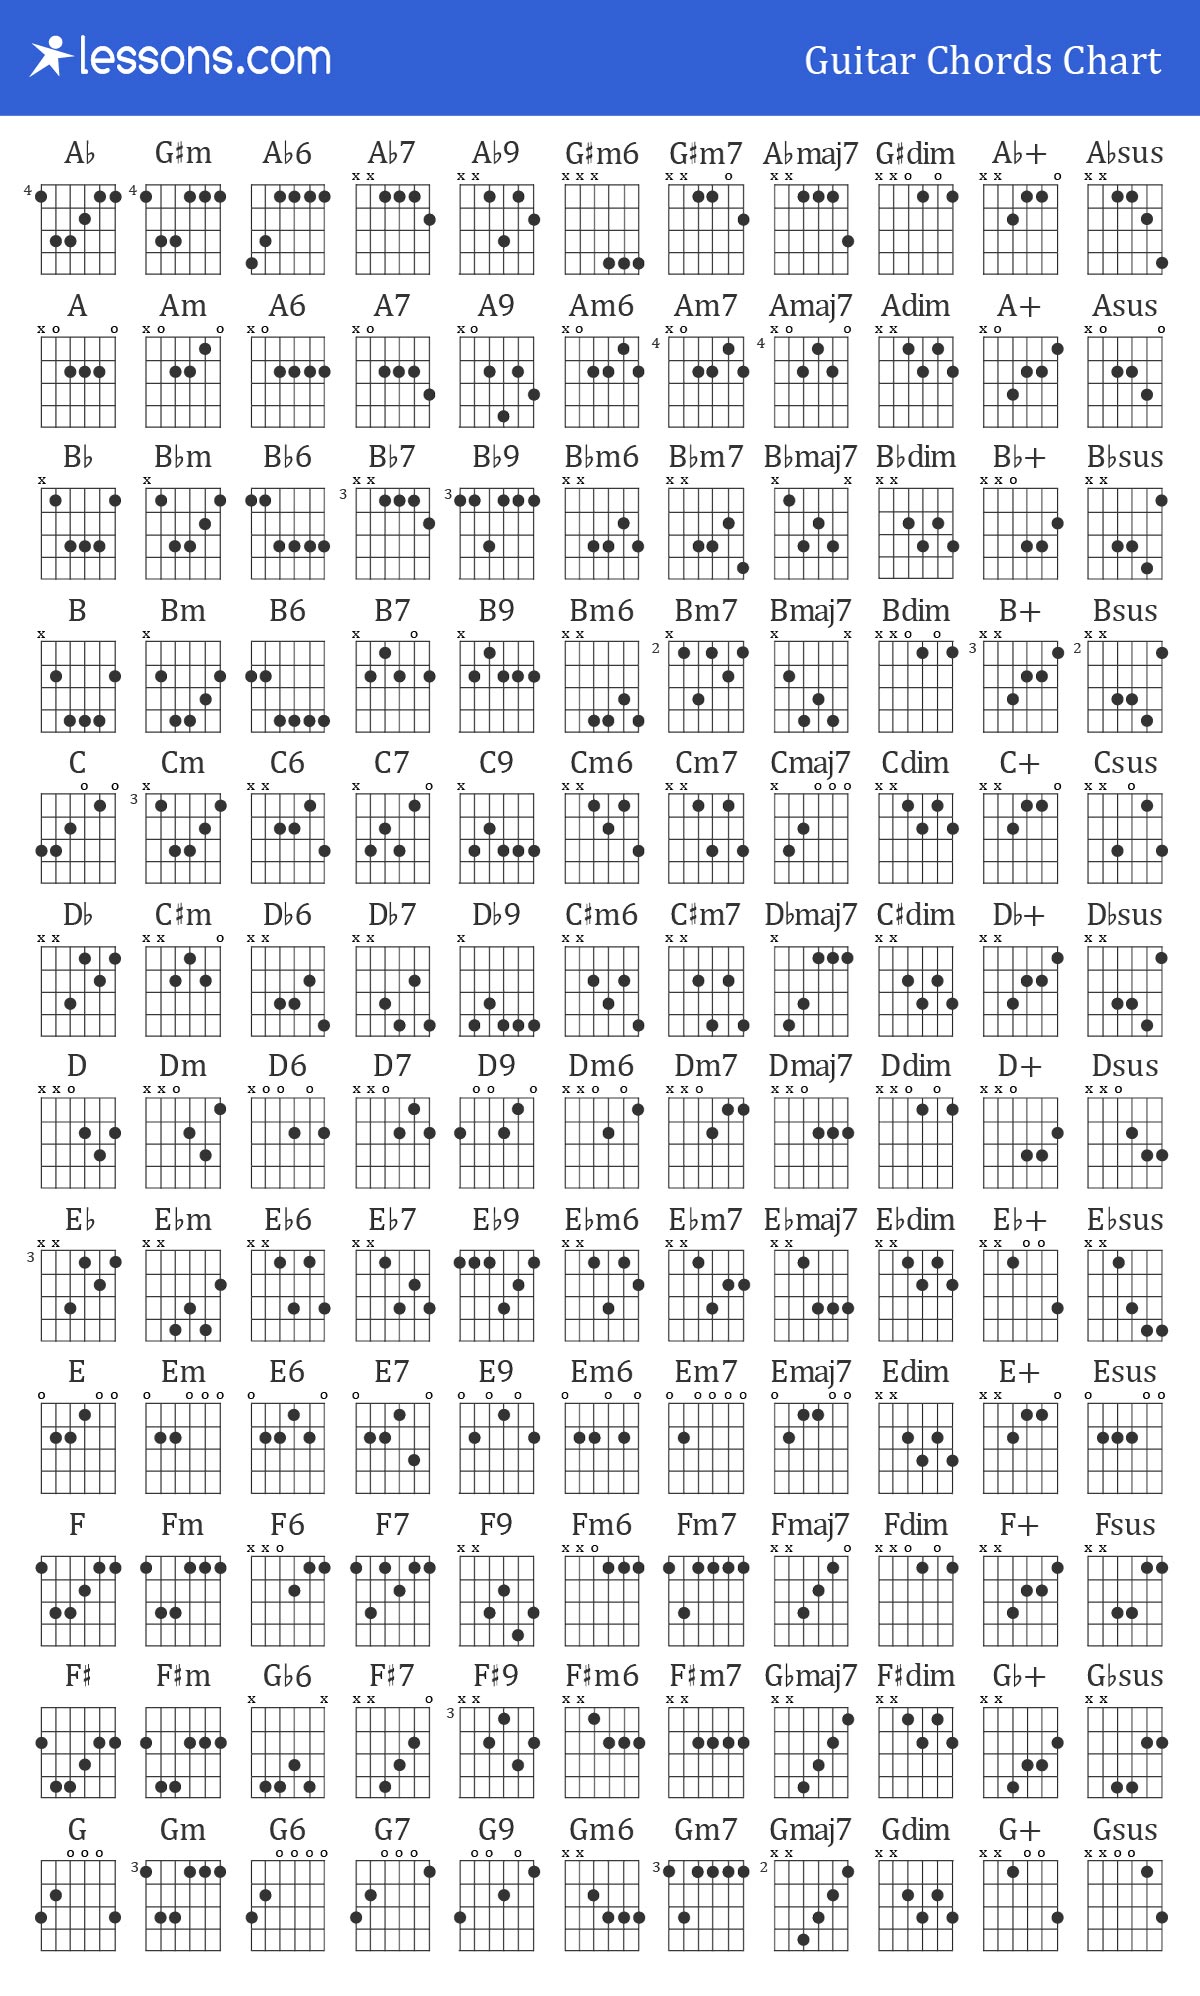 complete guitar chord chart pdf